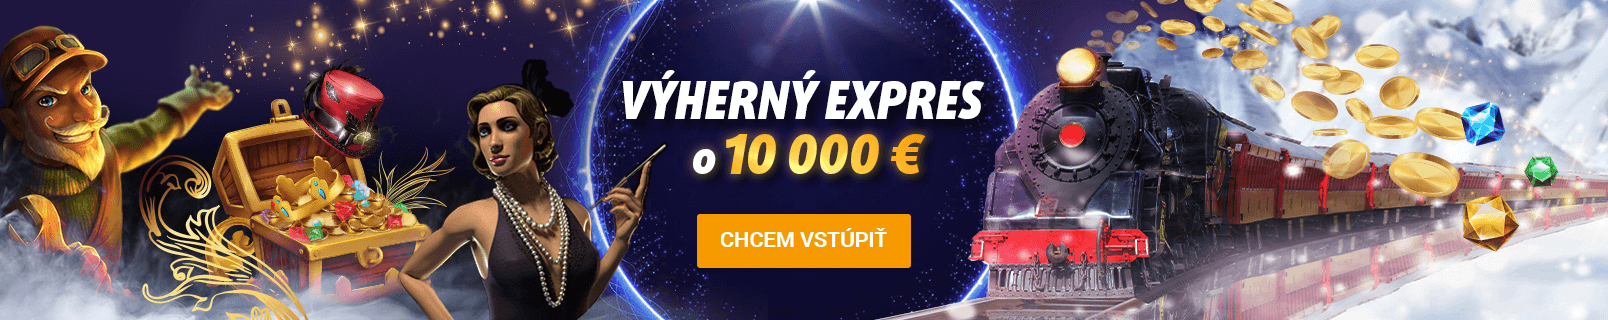 Turnamen Winning Express €10.000 di kasino Tipsport